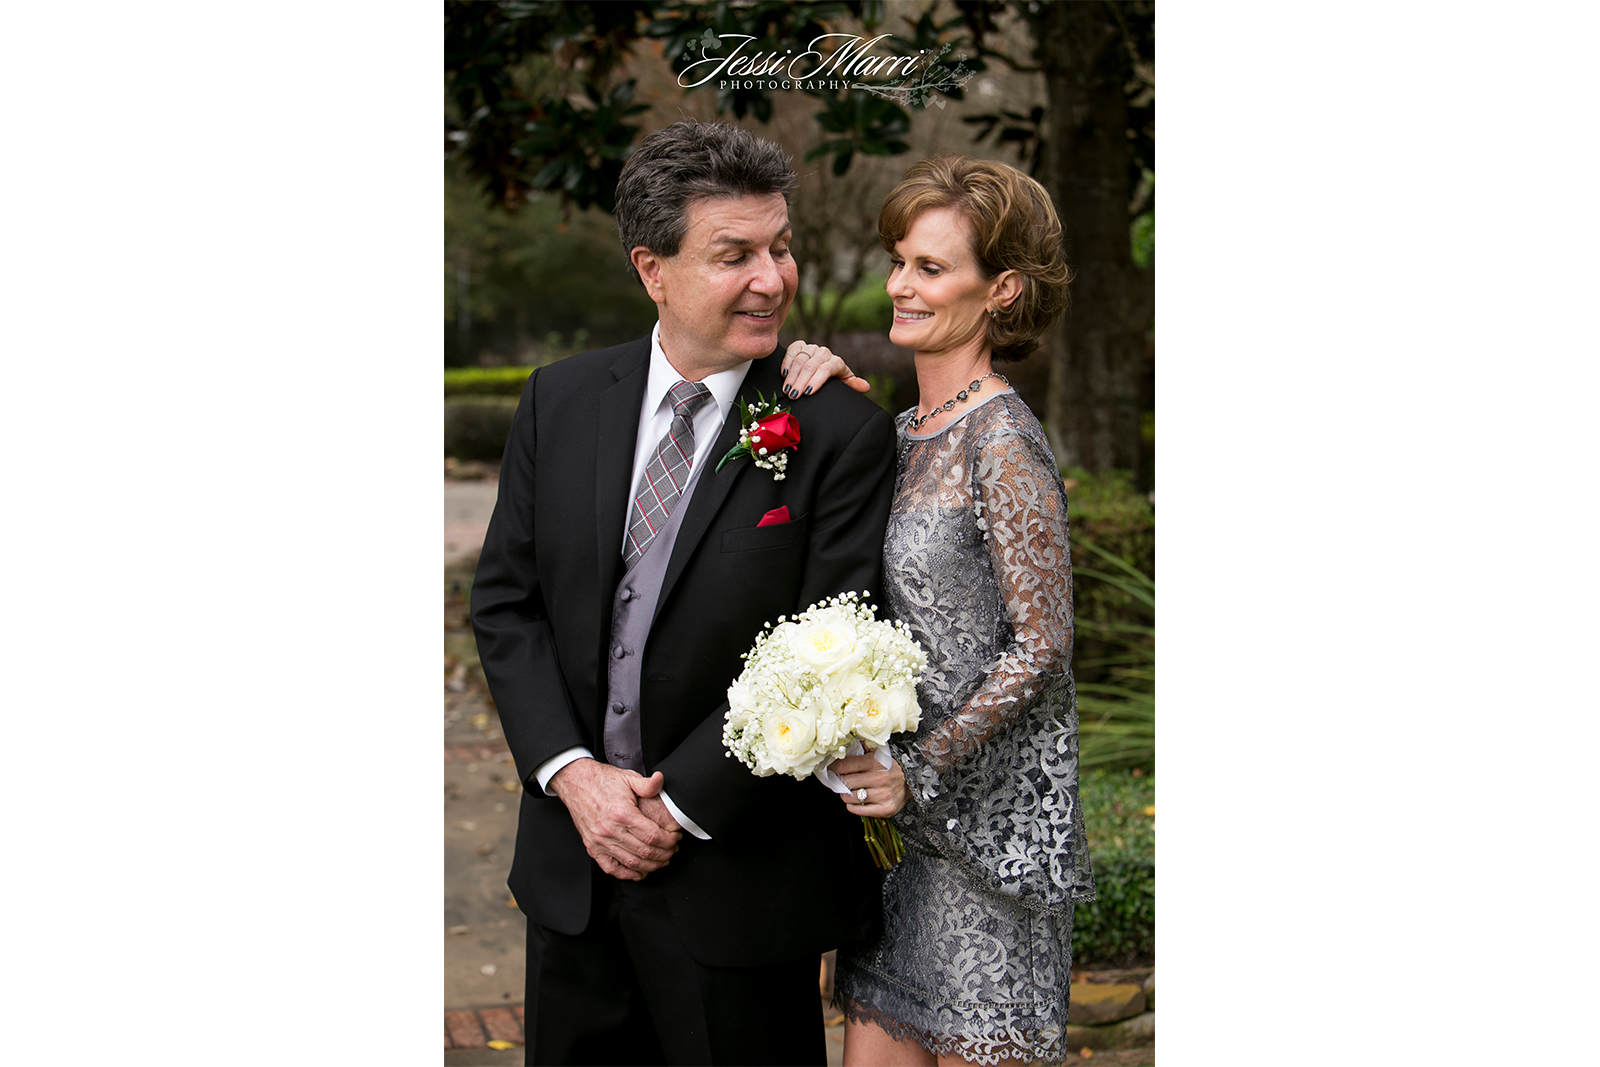 Brent & Shelly - Best Wedding Photographer Houston